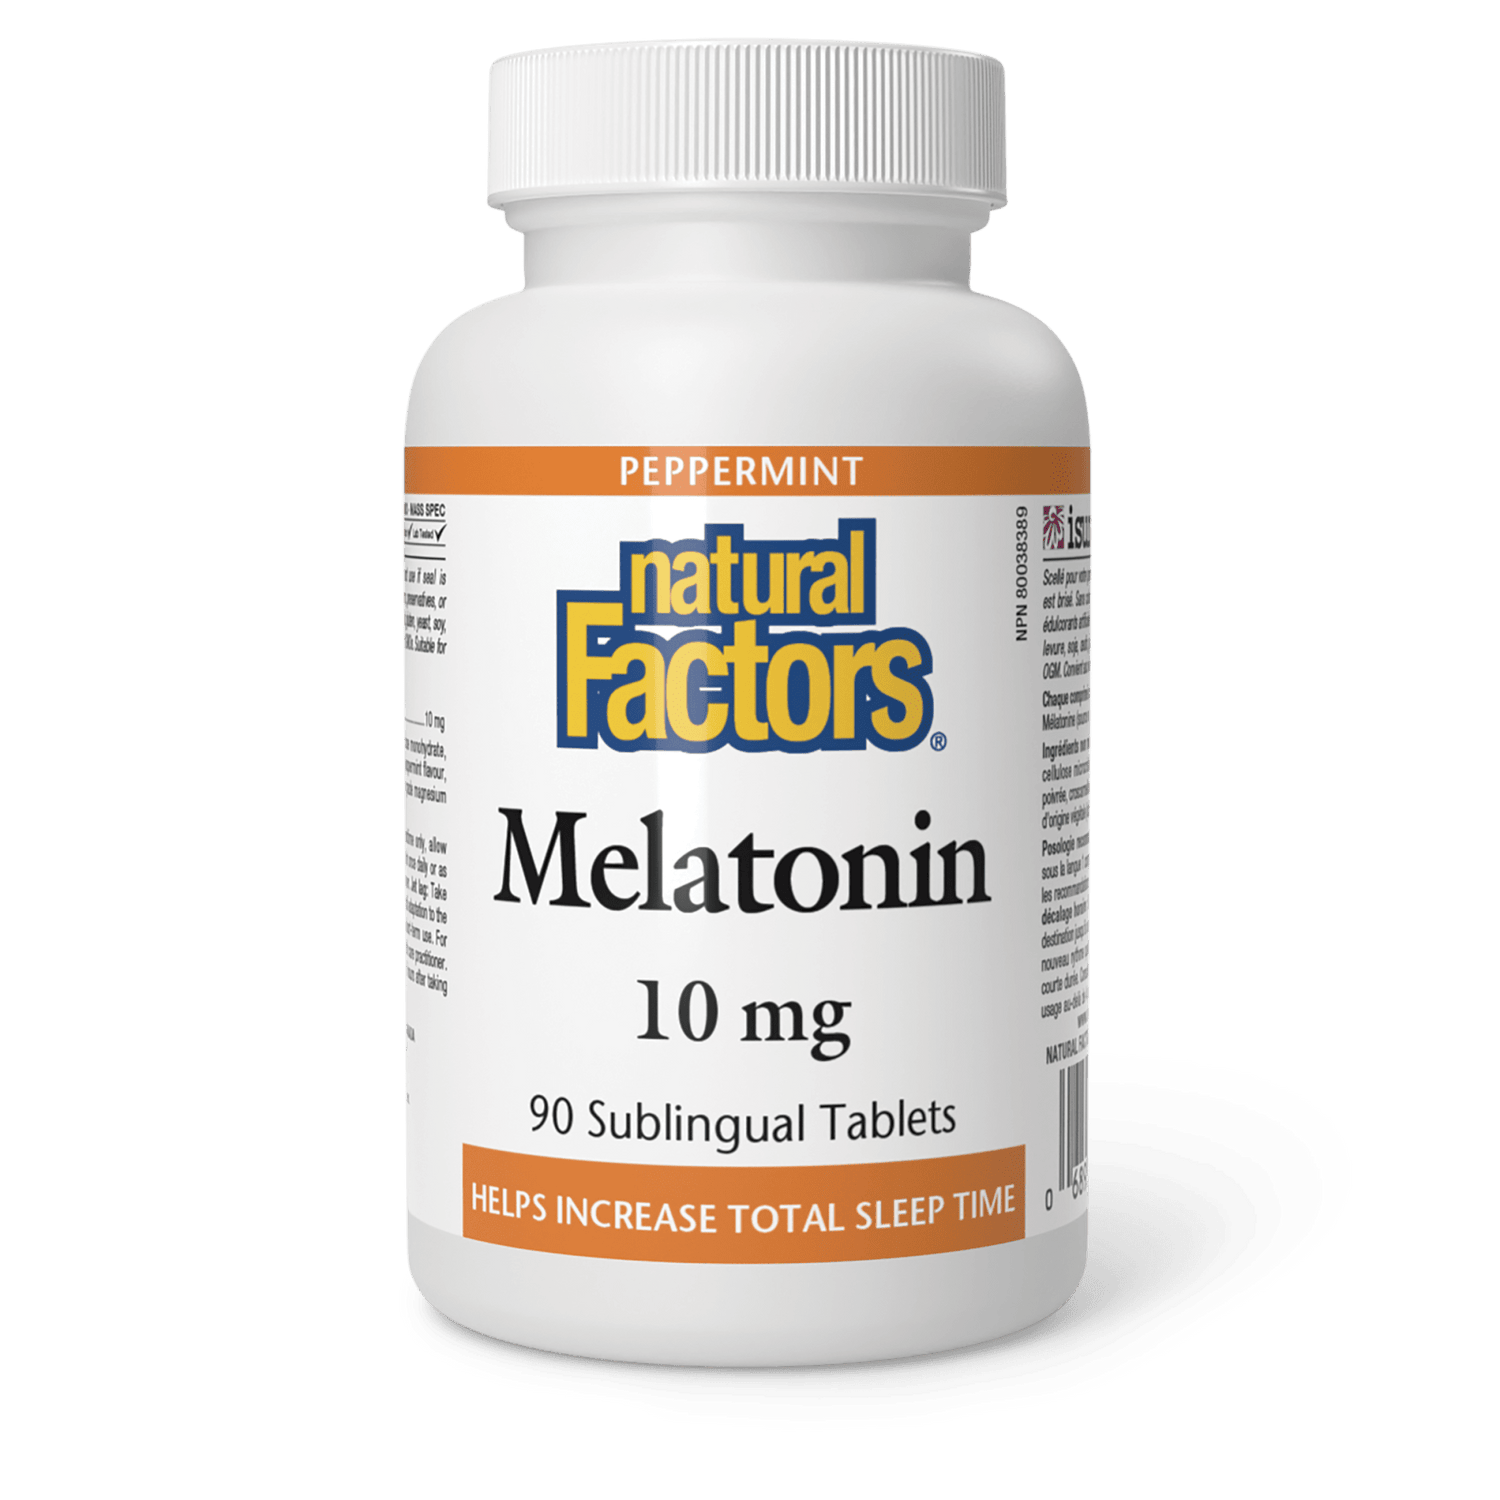 Melatonin 10 mg, Peppermint, Natural Factors|v|image|2719